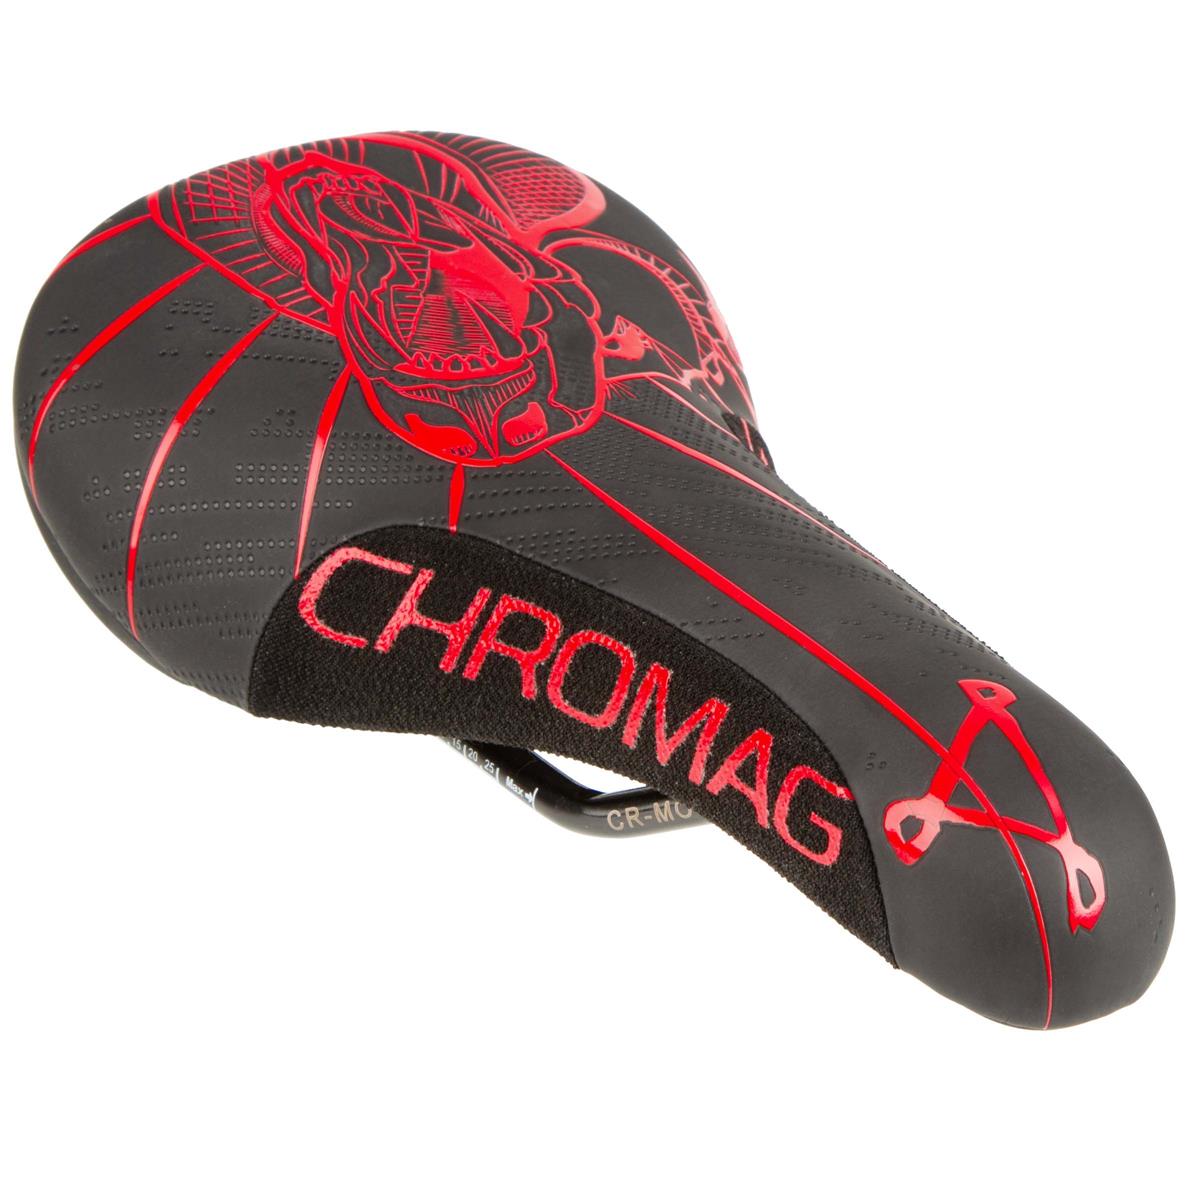 Chromag Sella Overture 2019 243 x 136 mm, Black/Red